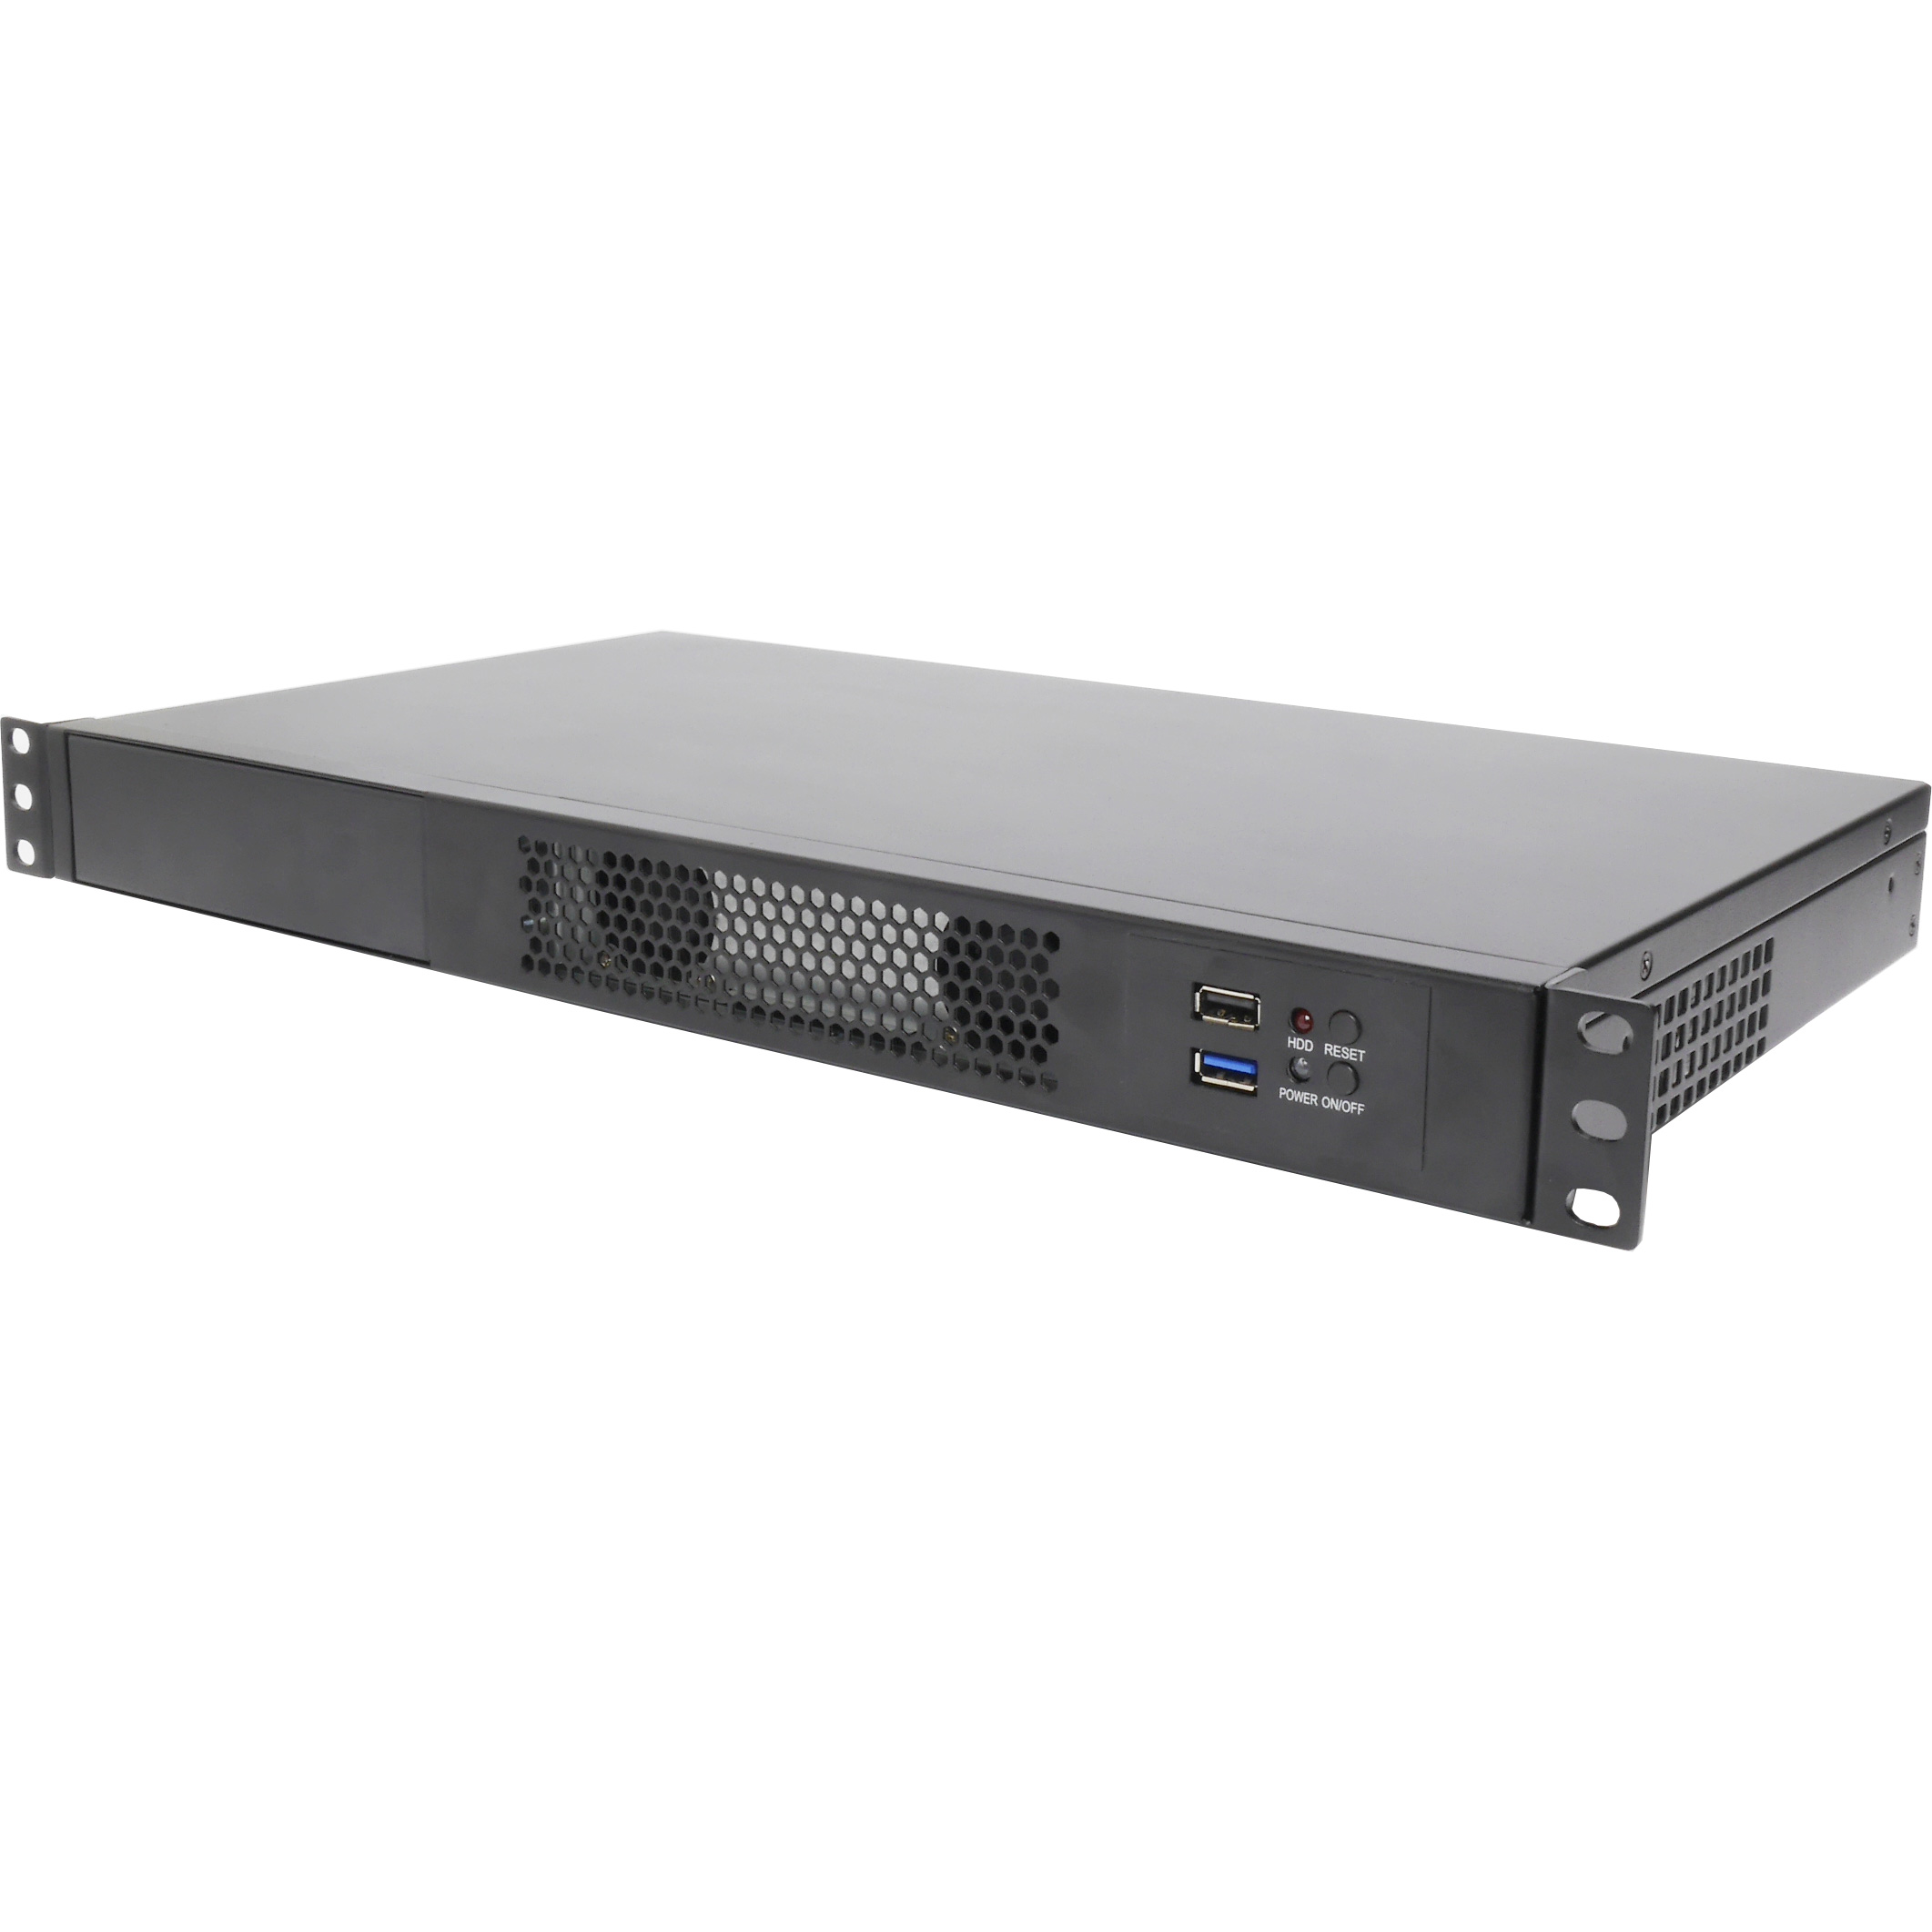 Серверный корпус 1U NR-N125CD (MiniITX, 1x5.25 or 1x3.5int or 2x2.5int, 250mm) черный, NegoRack